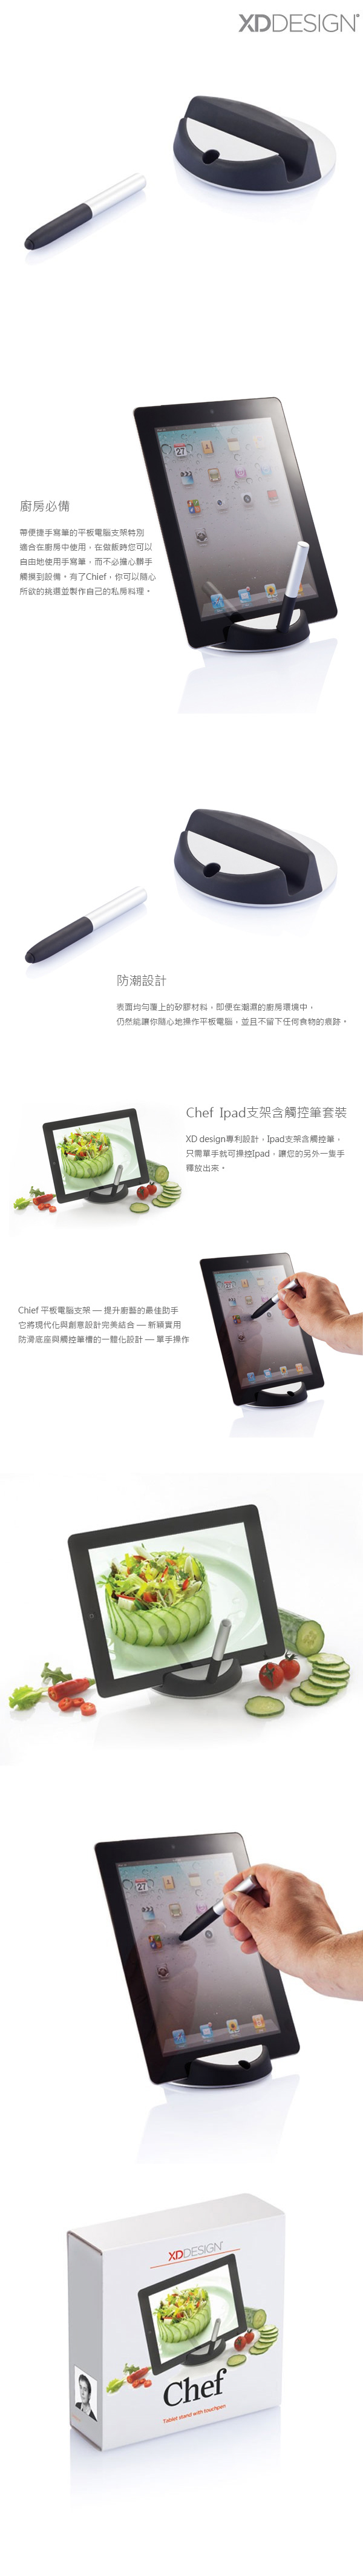 XDDESIGN Chef Ipad支架含觸控筆套裝